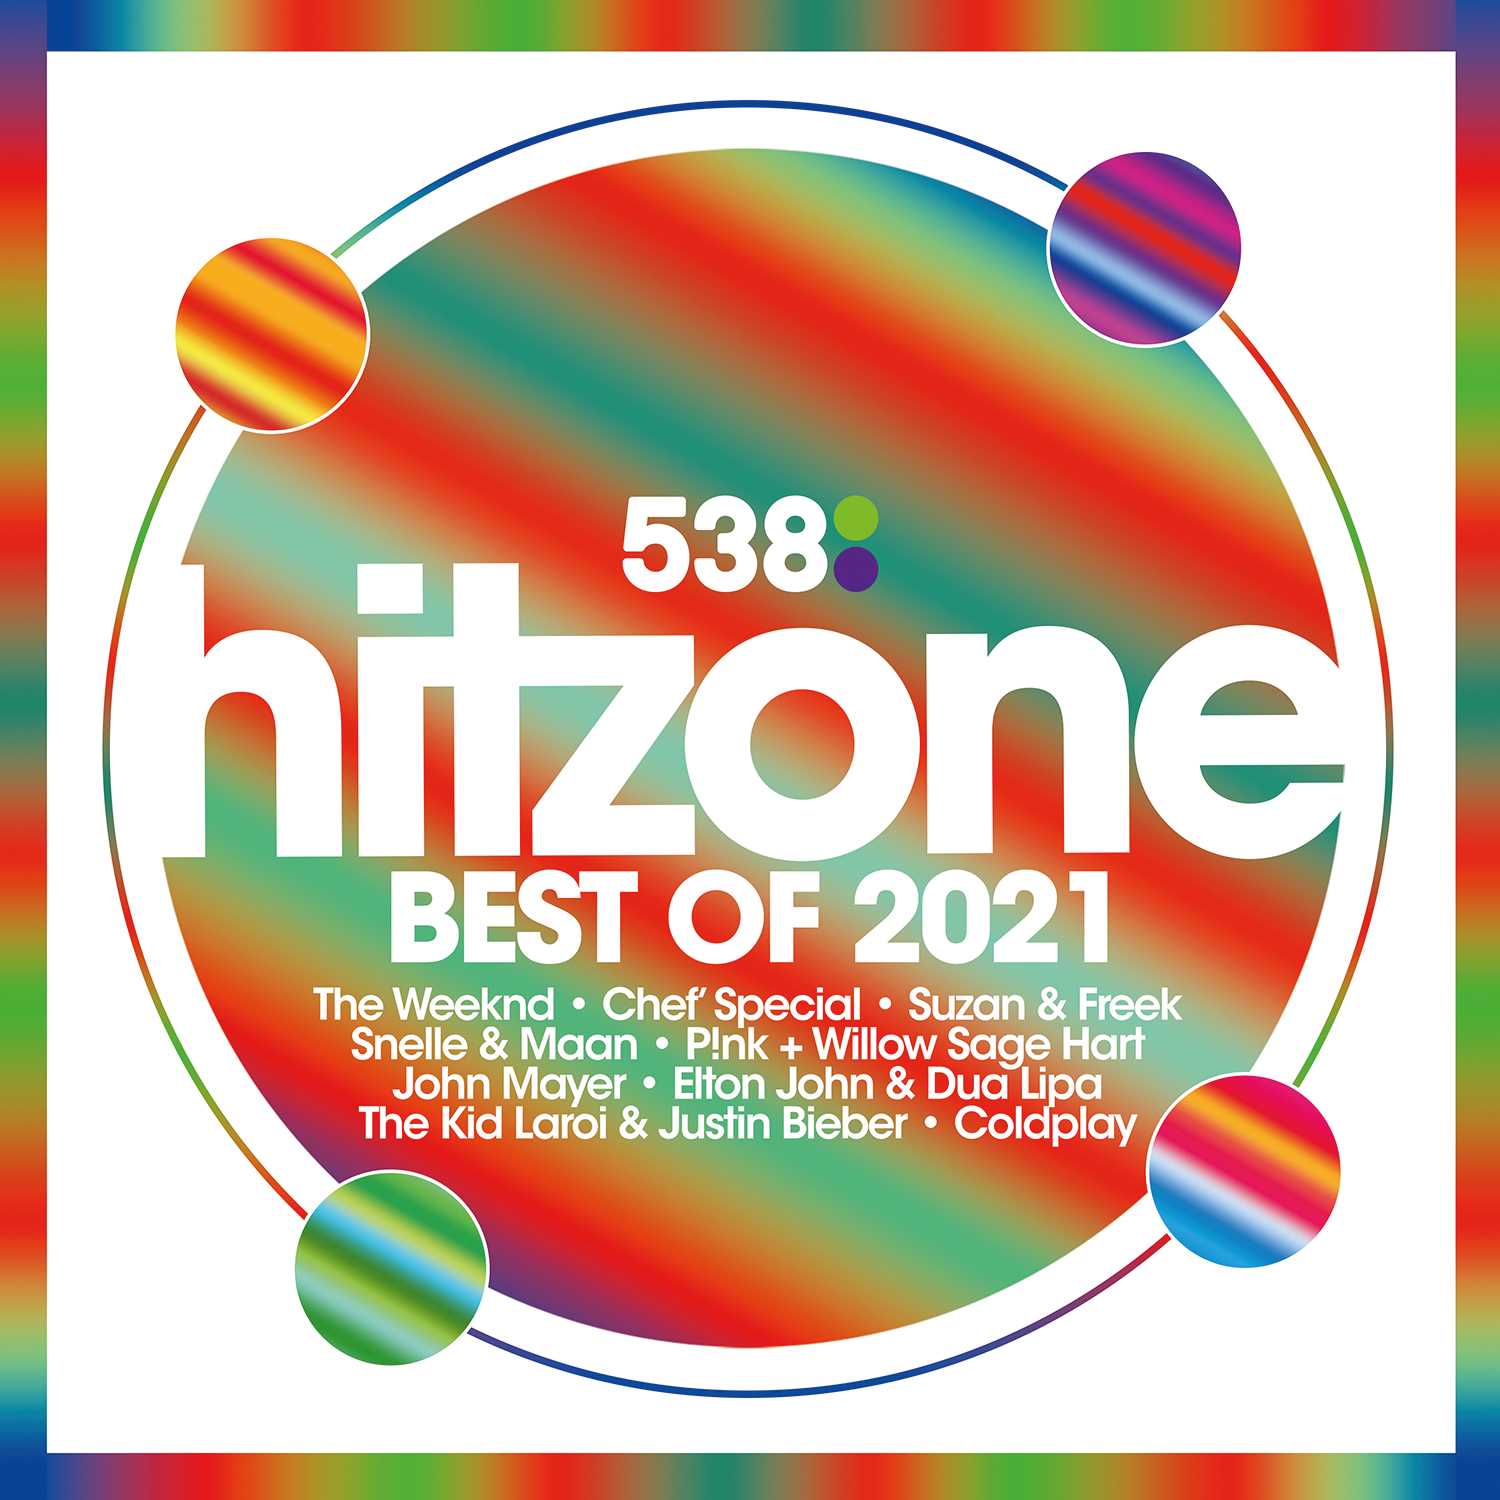 ingesteld geloof Ochtend 538 Hitzone - Best Of 2021 (2CD) - Various Artists | Platenzaak.nl